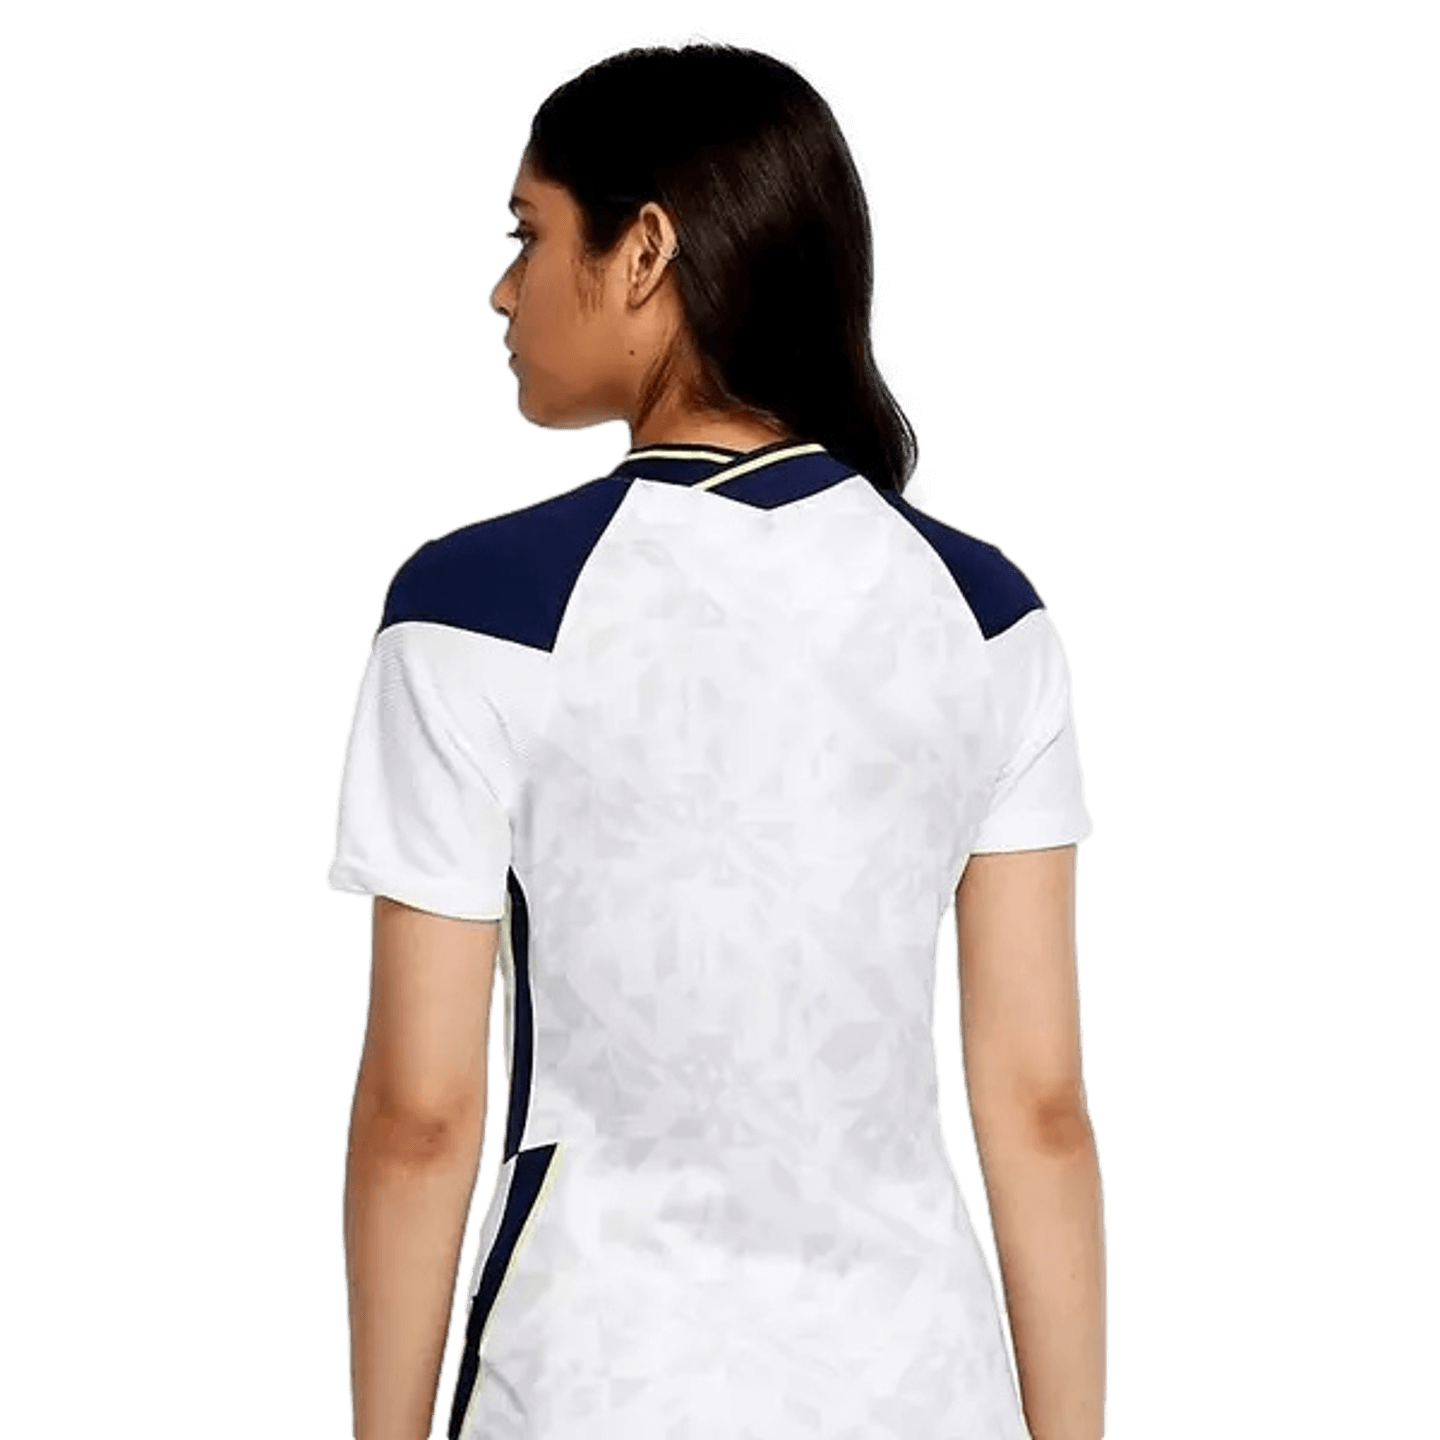 Camiseta Nike Tottenham 20/21 Primera equipación mujer